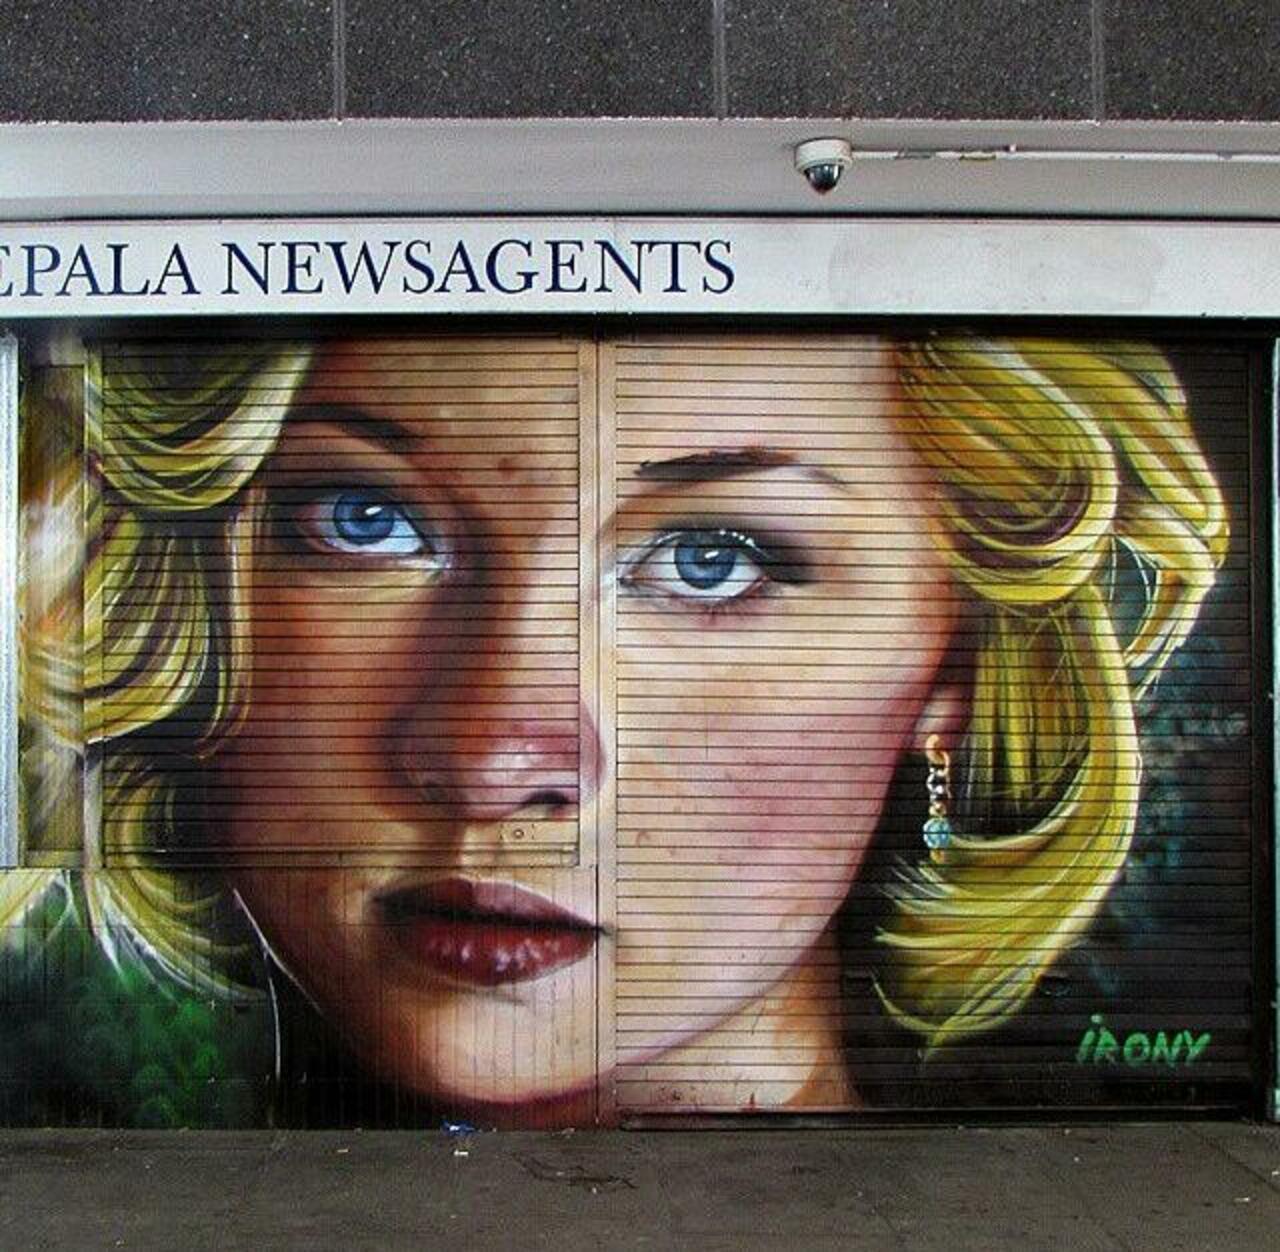 "@GoogleStreetArt: Street Art portrait by whoamirony in Islington, London 

#art #arte #graffiti #streetart http://t.co/1VpnMkvUin"